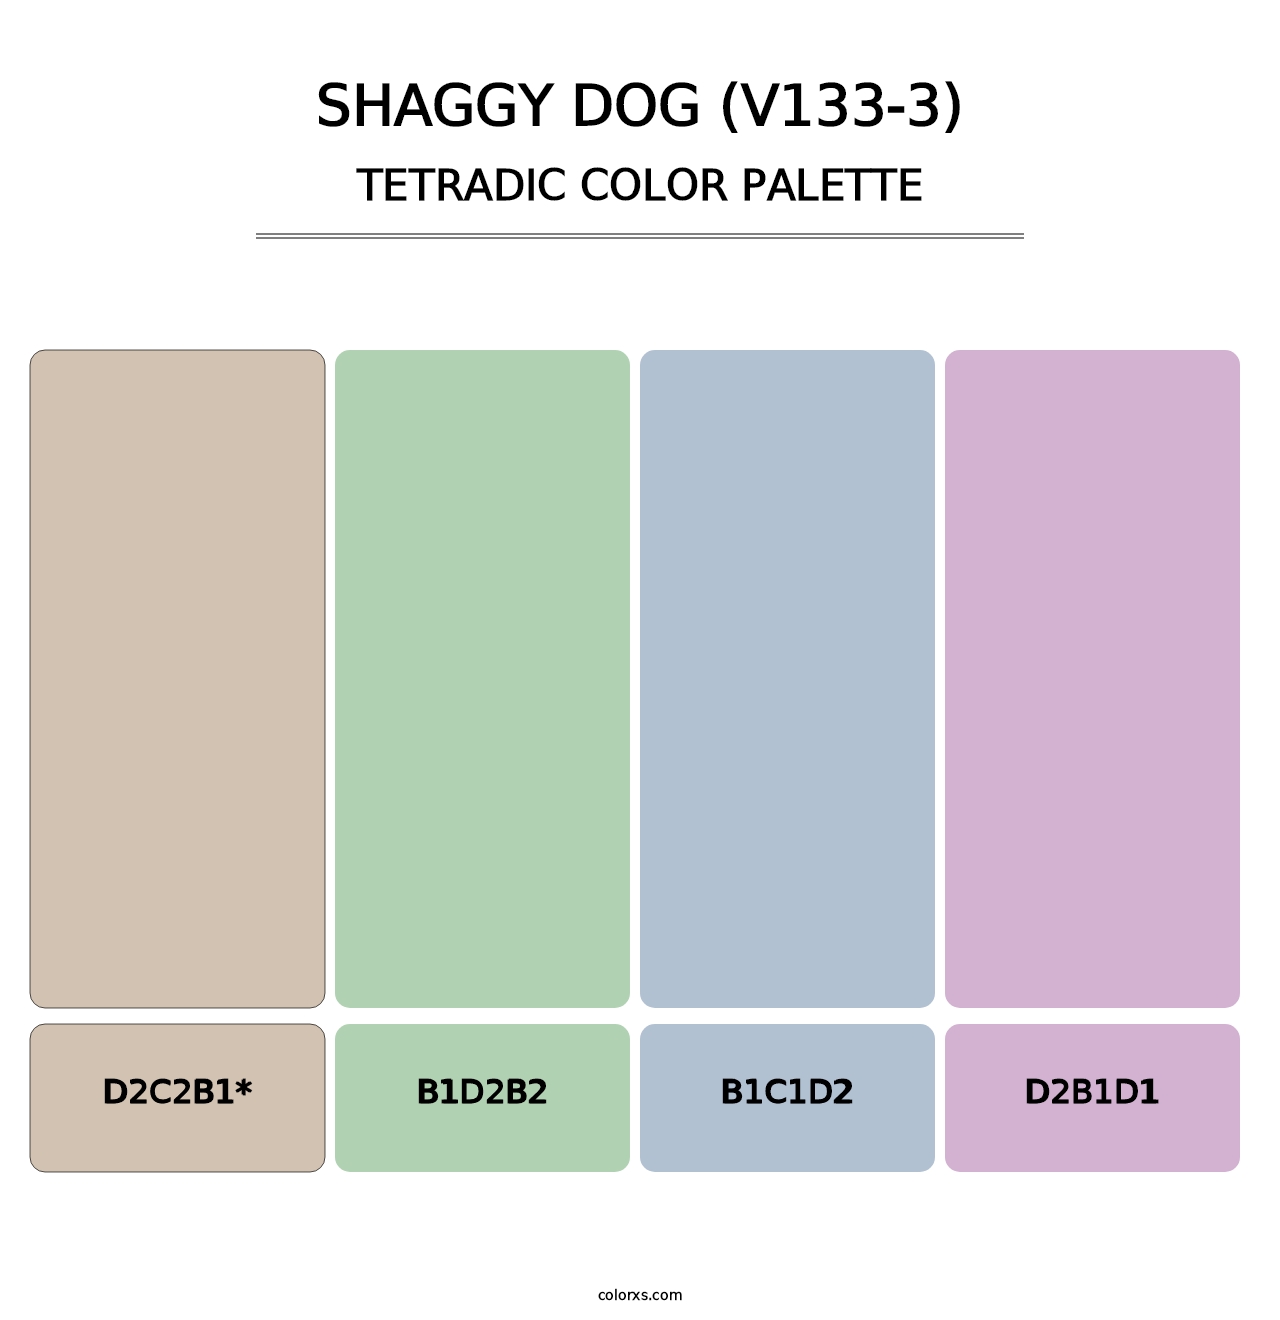 Shaggy Dog (V133-3) - Tetradic Color Palette